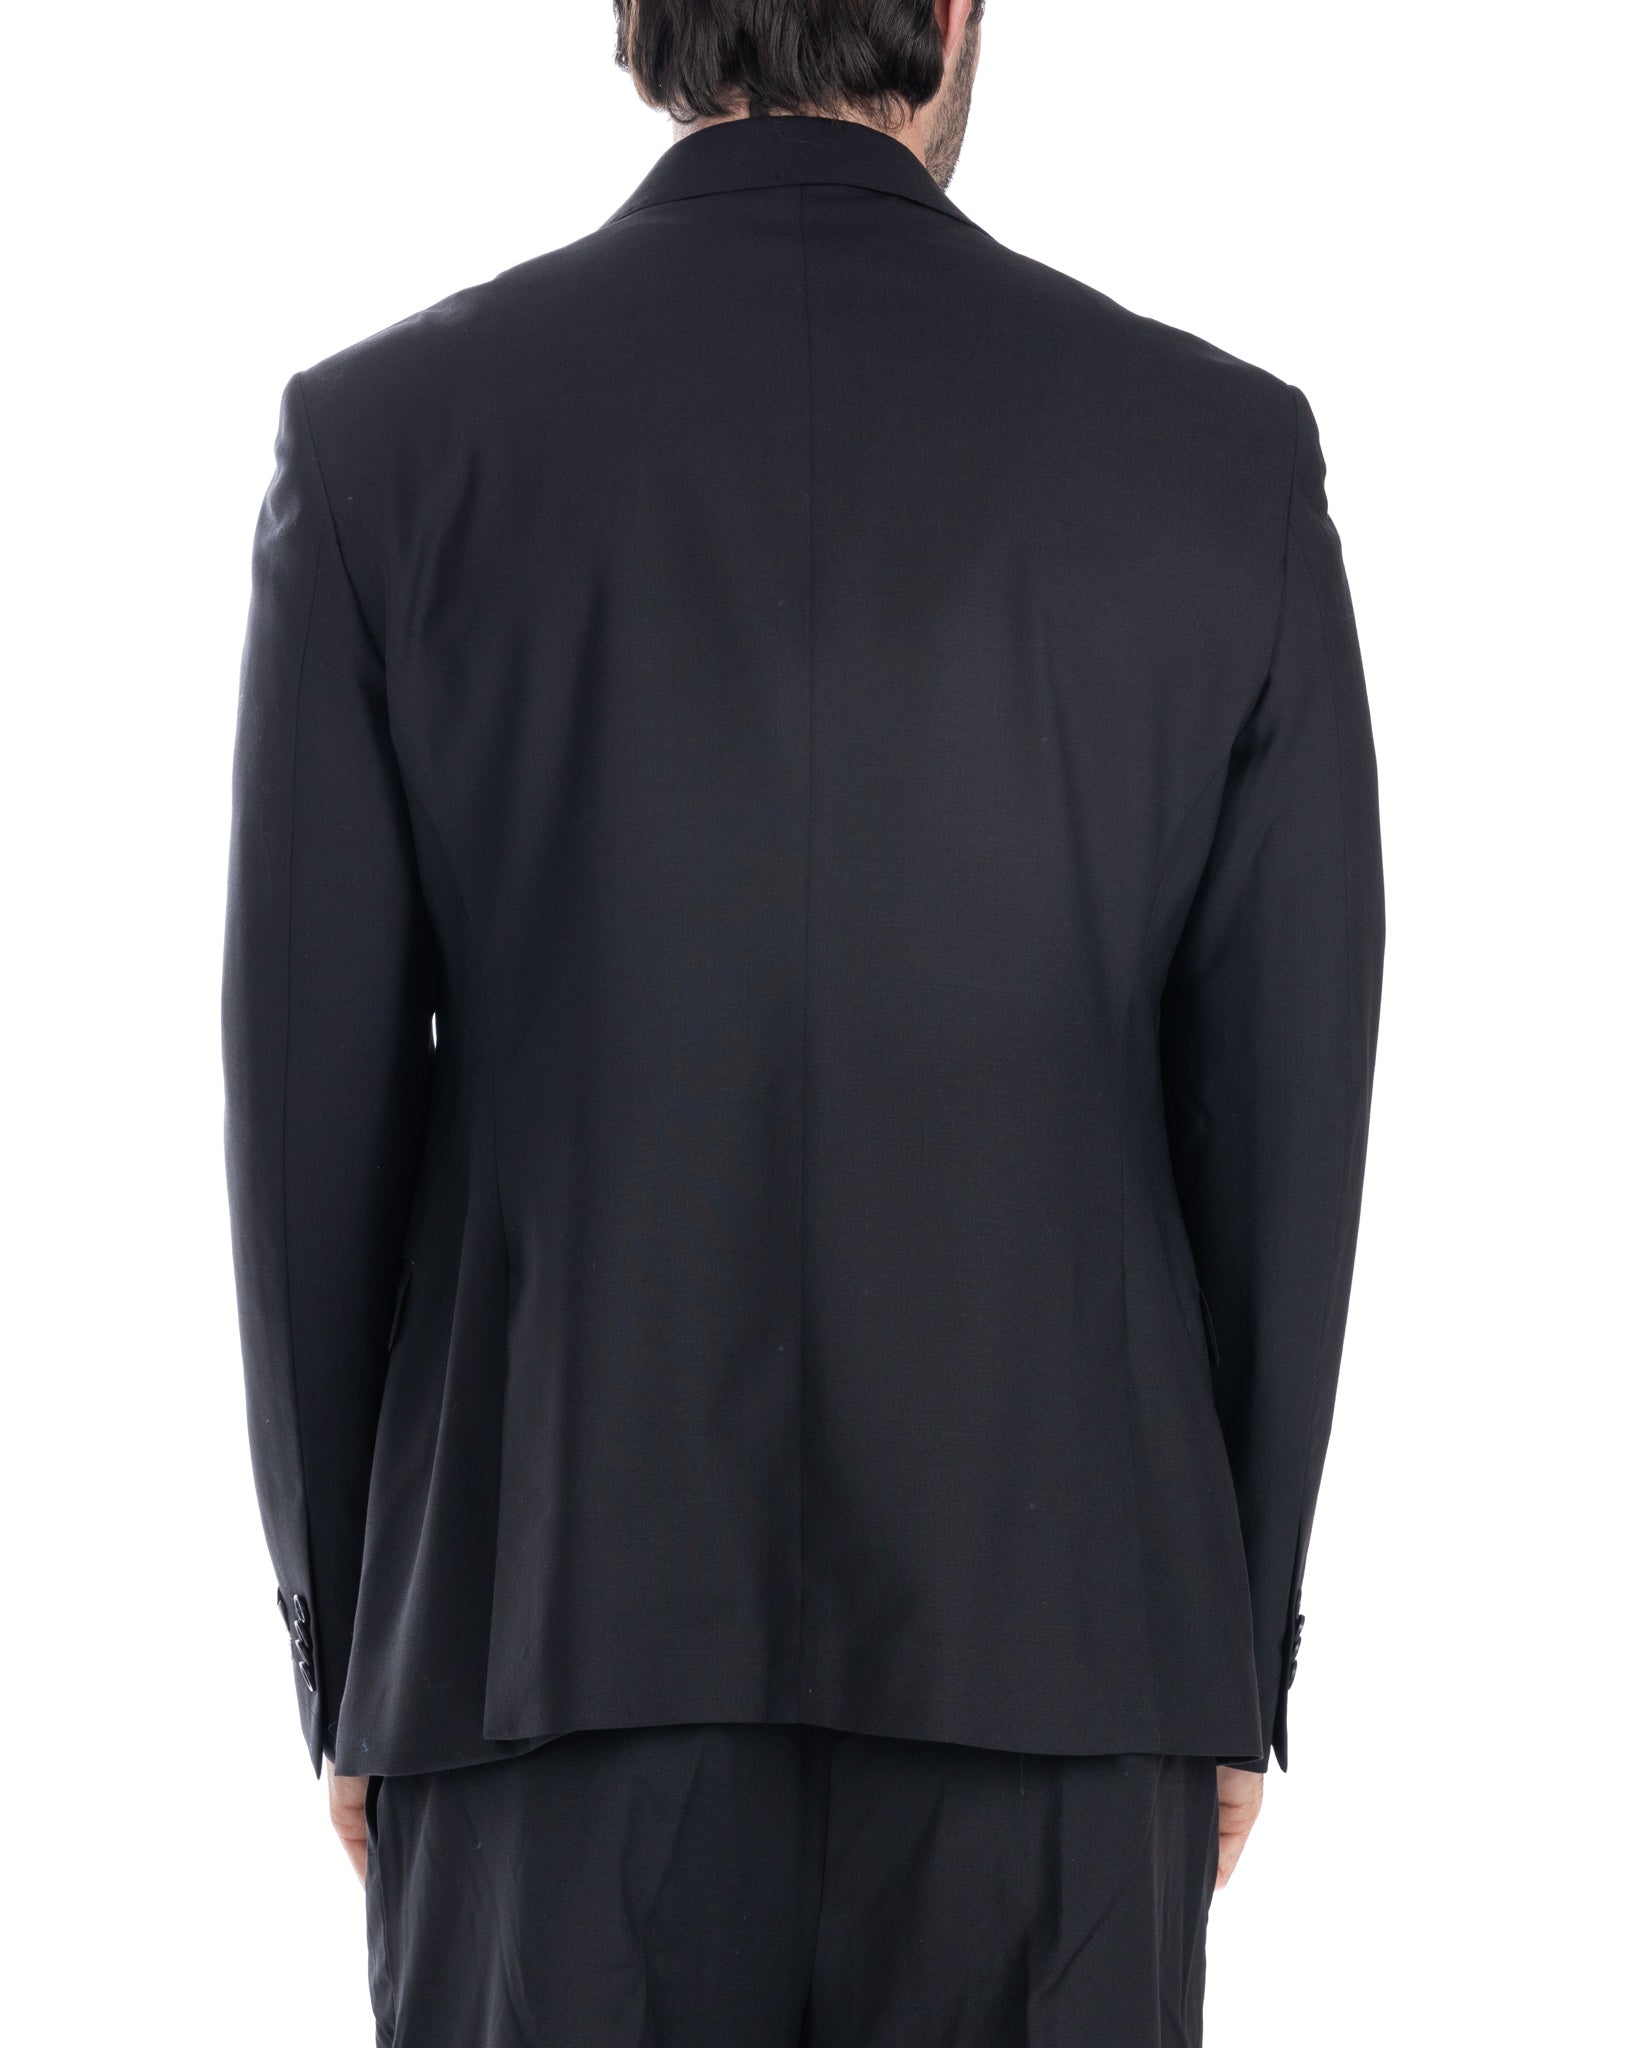 Brooklyn - black double-breasted wool jacket